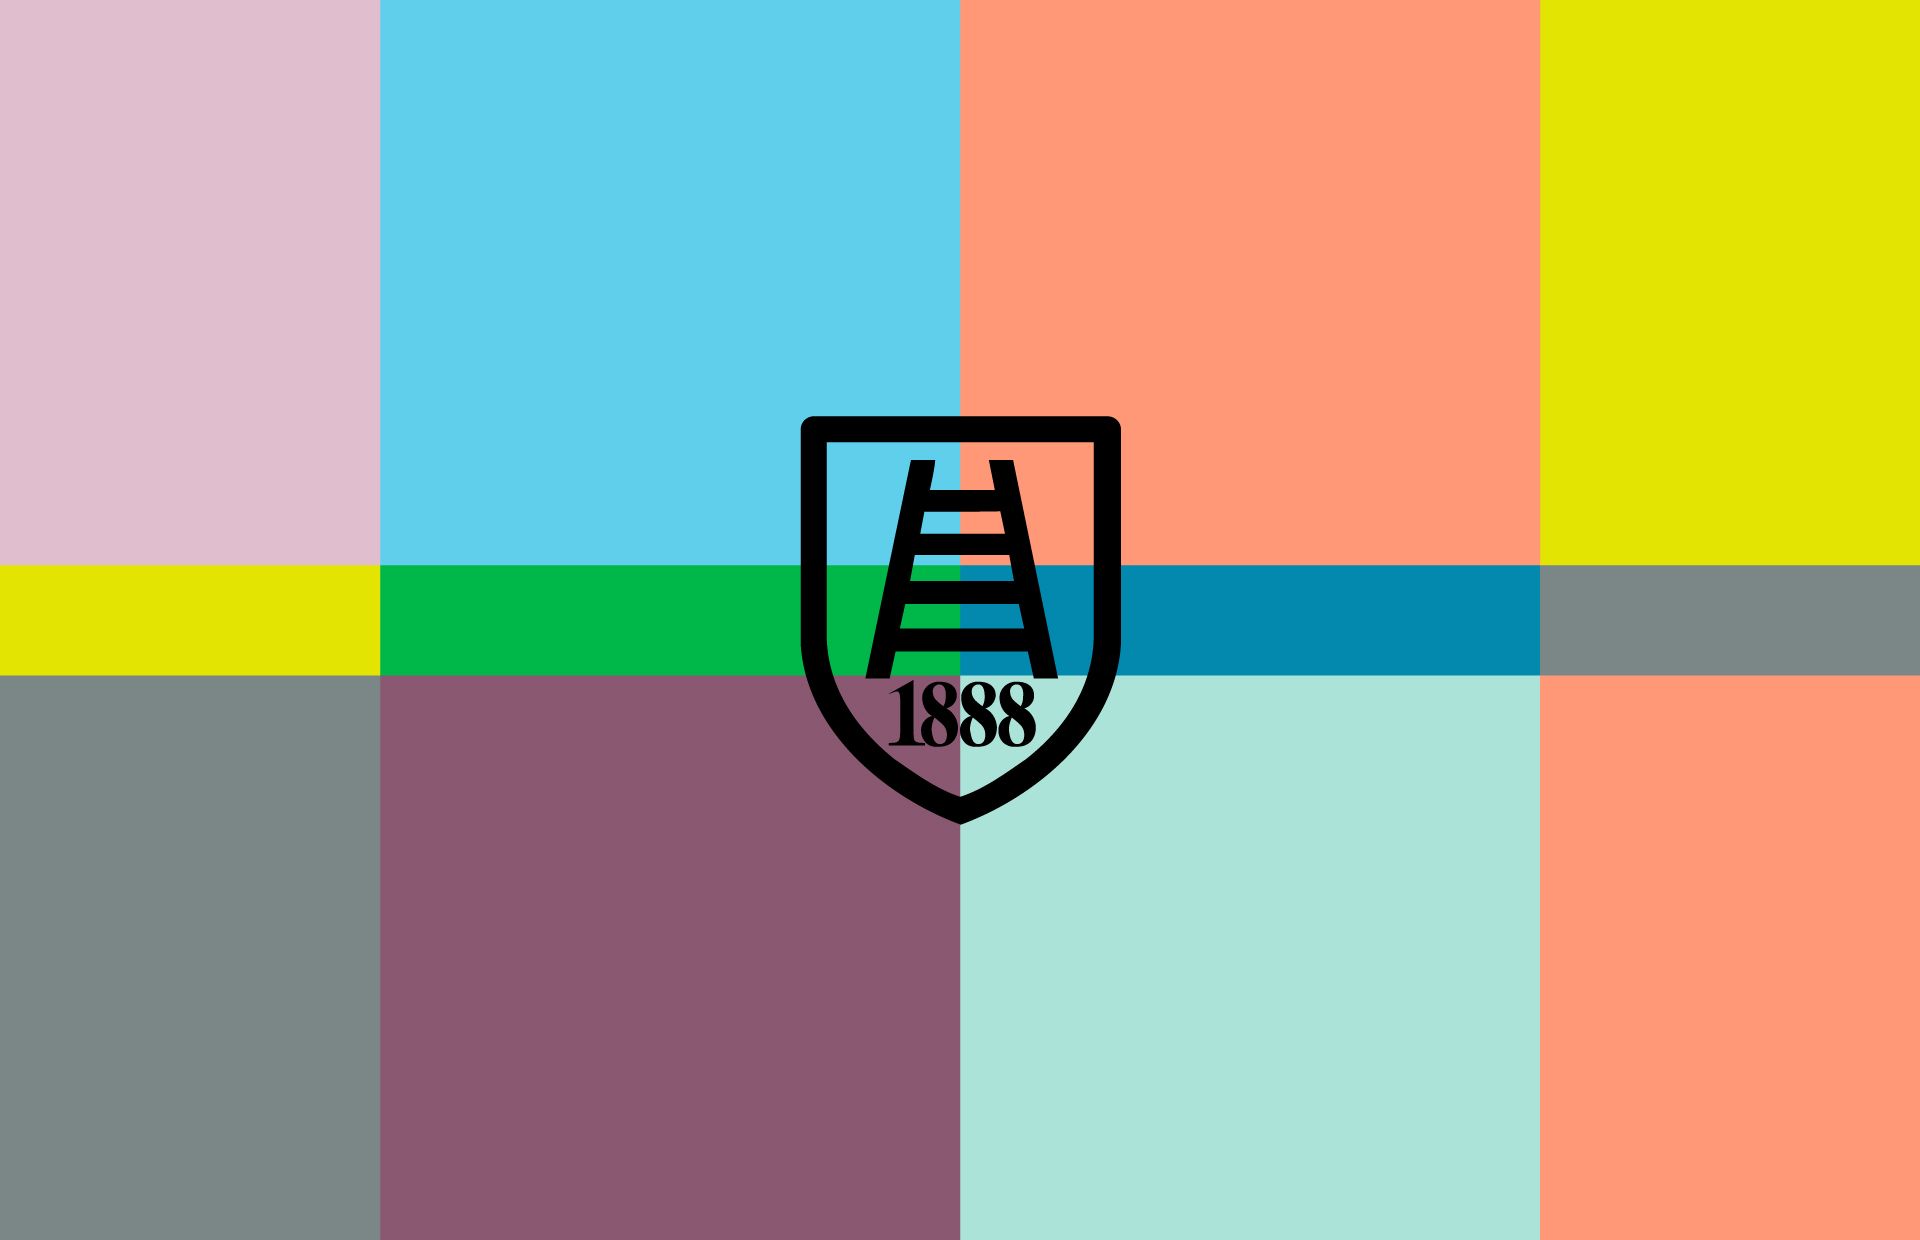 Fedrigoni logo sitting on a coloured palette of squares